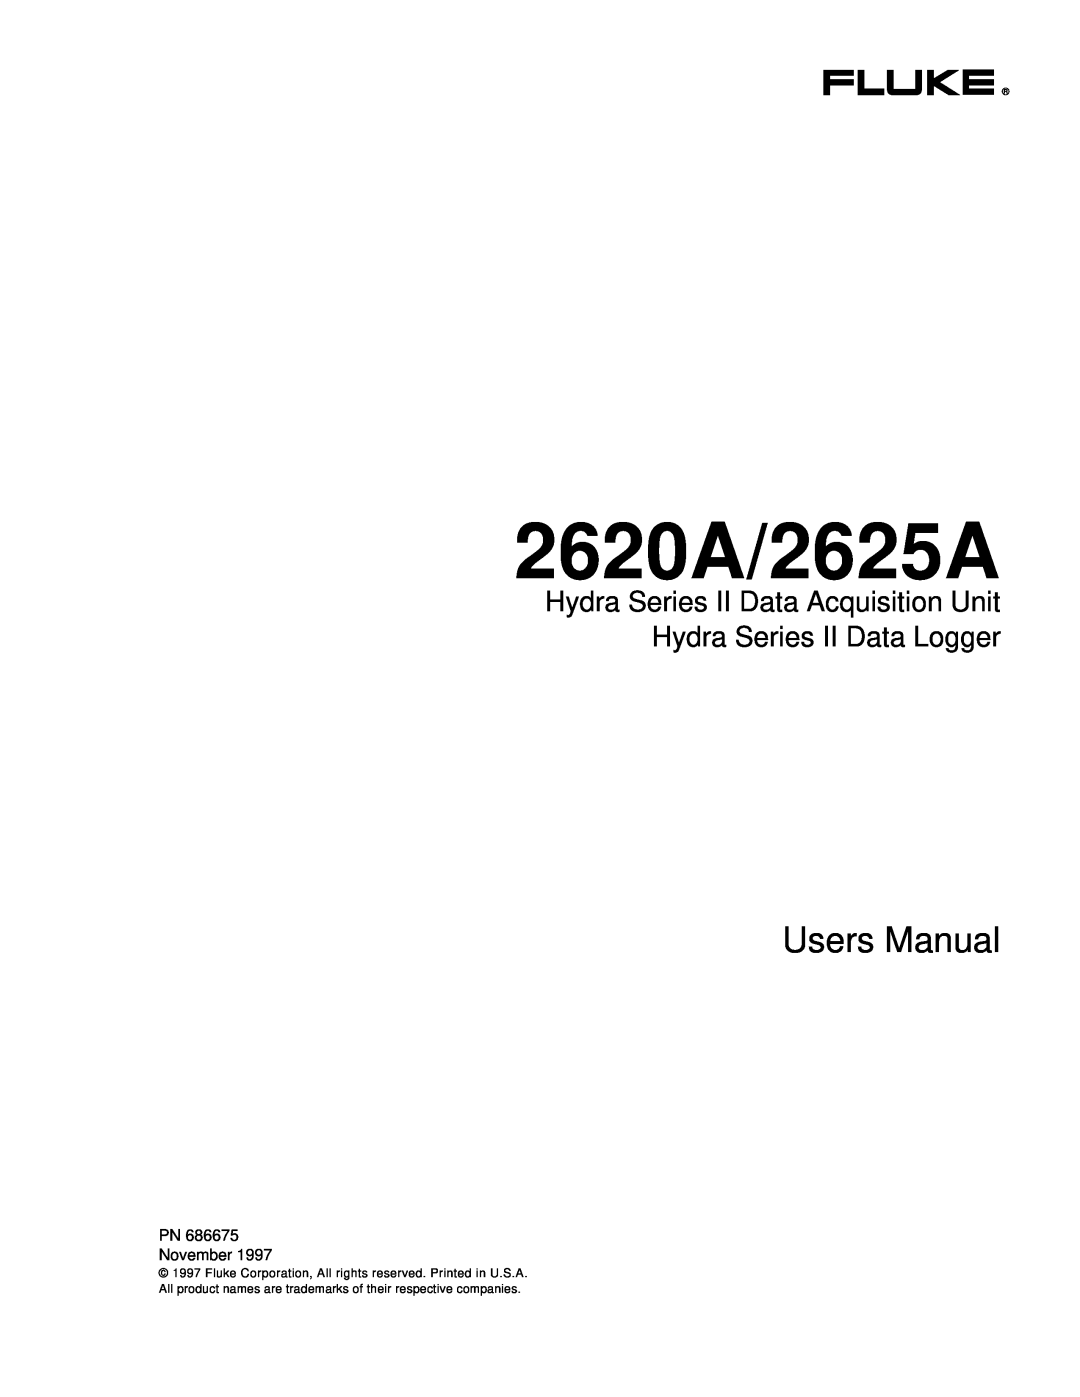 Fluke user manual 2620A/2625A, Users Manual, Hydra Series II Data Acquisition Unit Hydra Series II Data Logger 